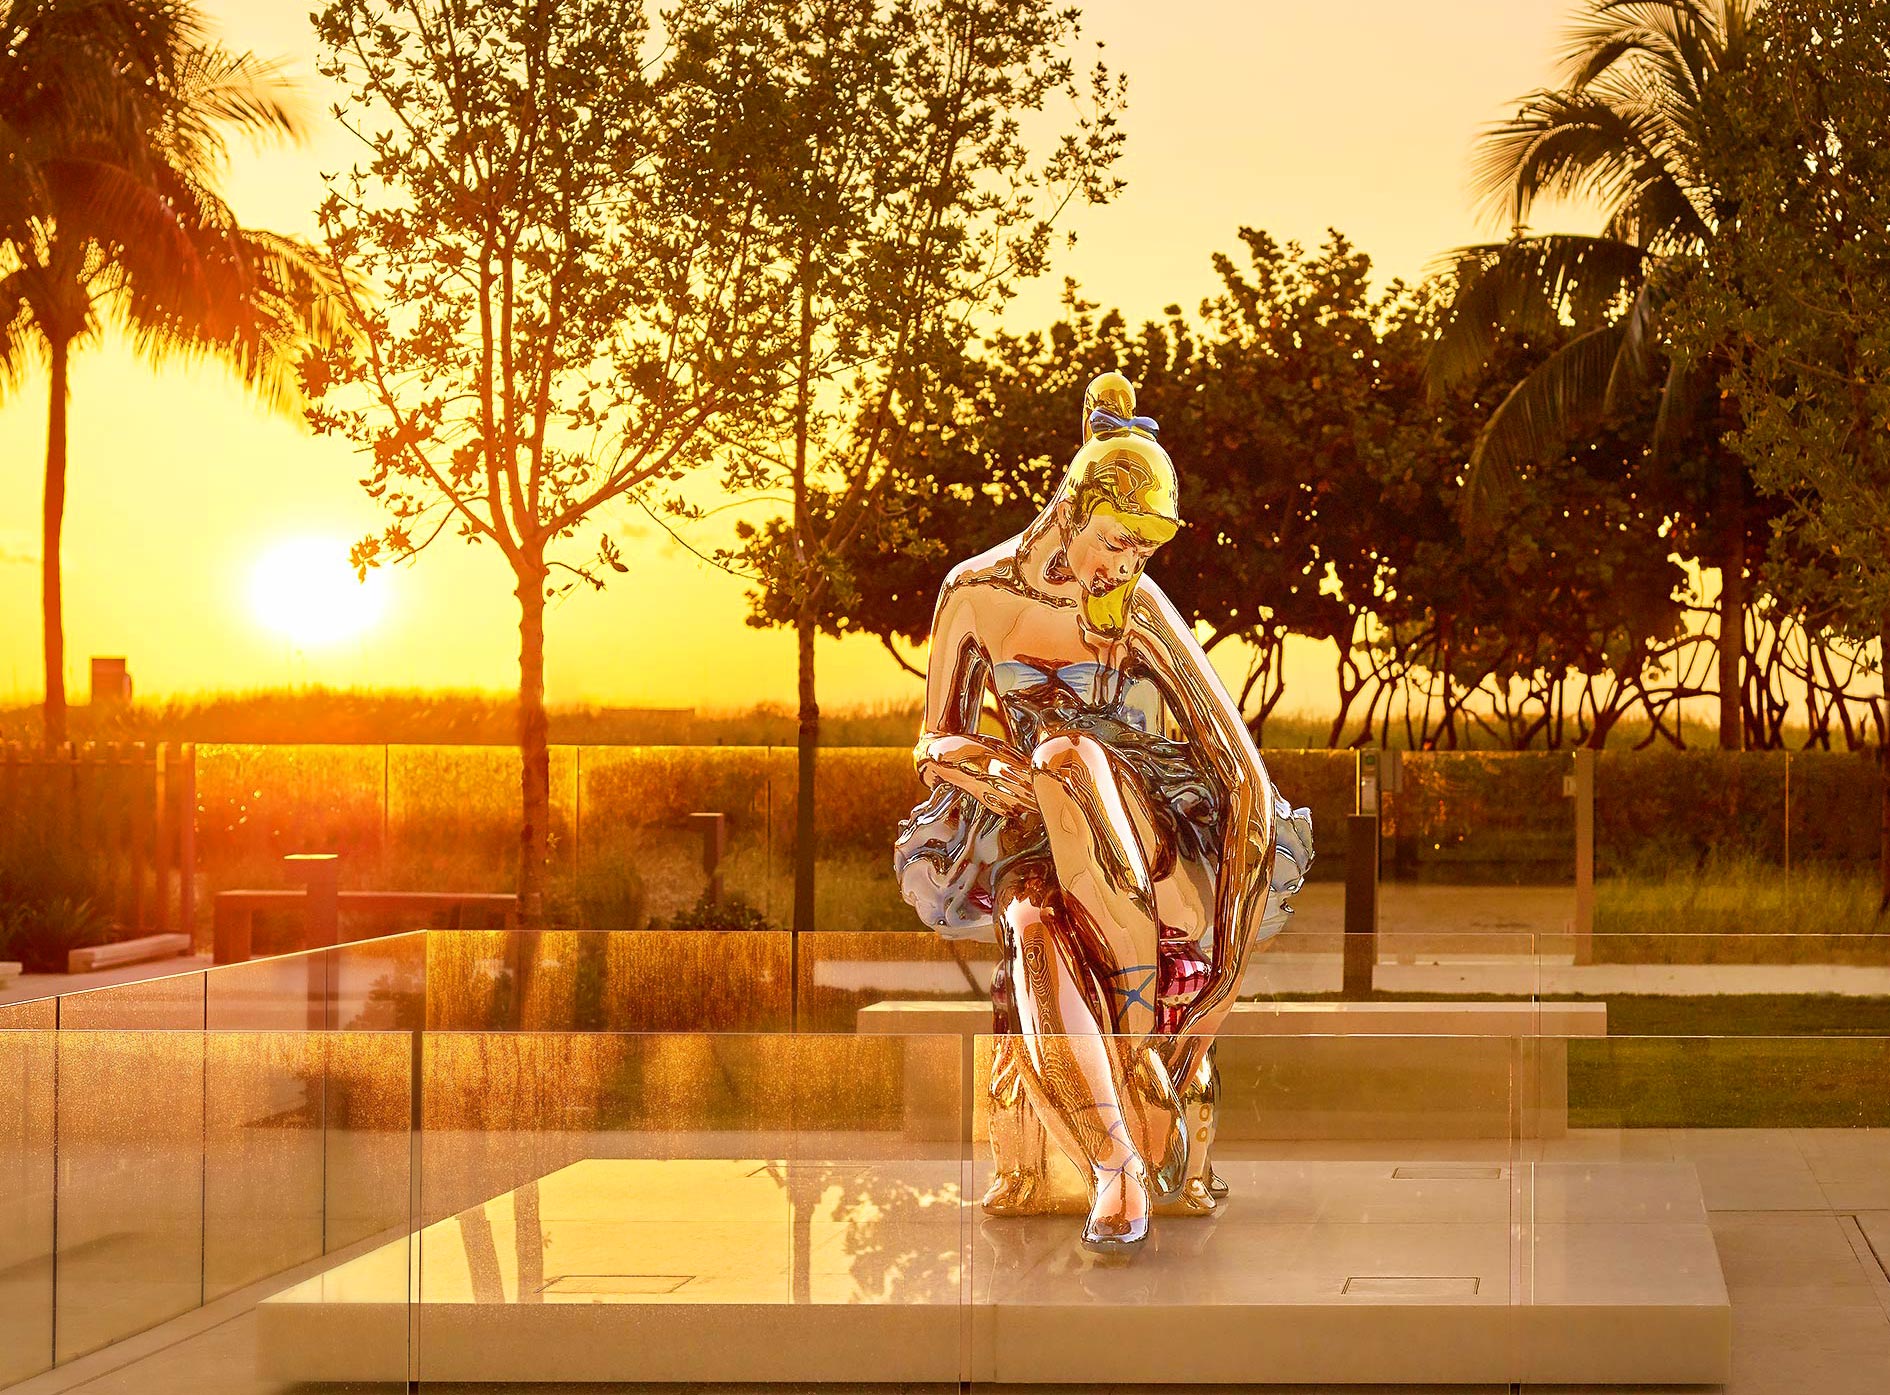 Jeff-Koons-Ballerina-Sculpture-Bal-Harbour-Florida-Sunrise-Resort